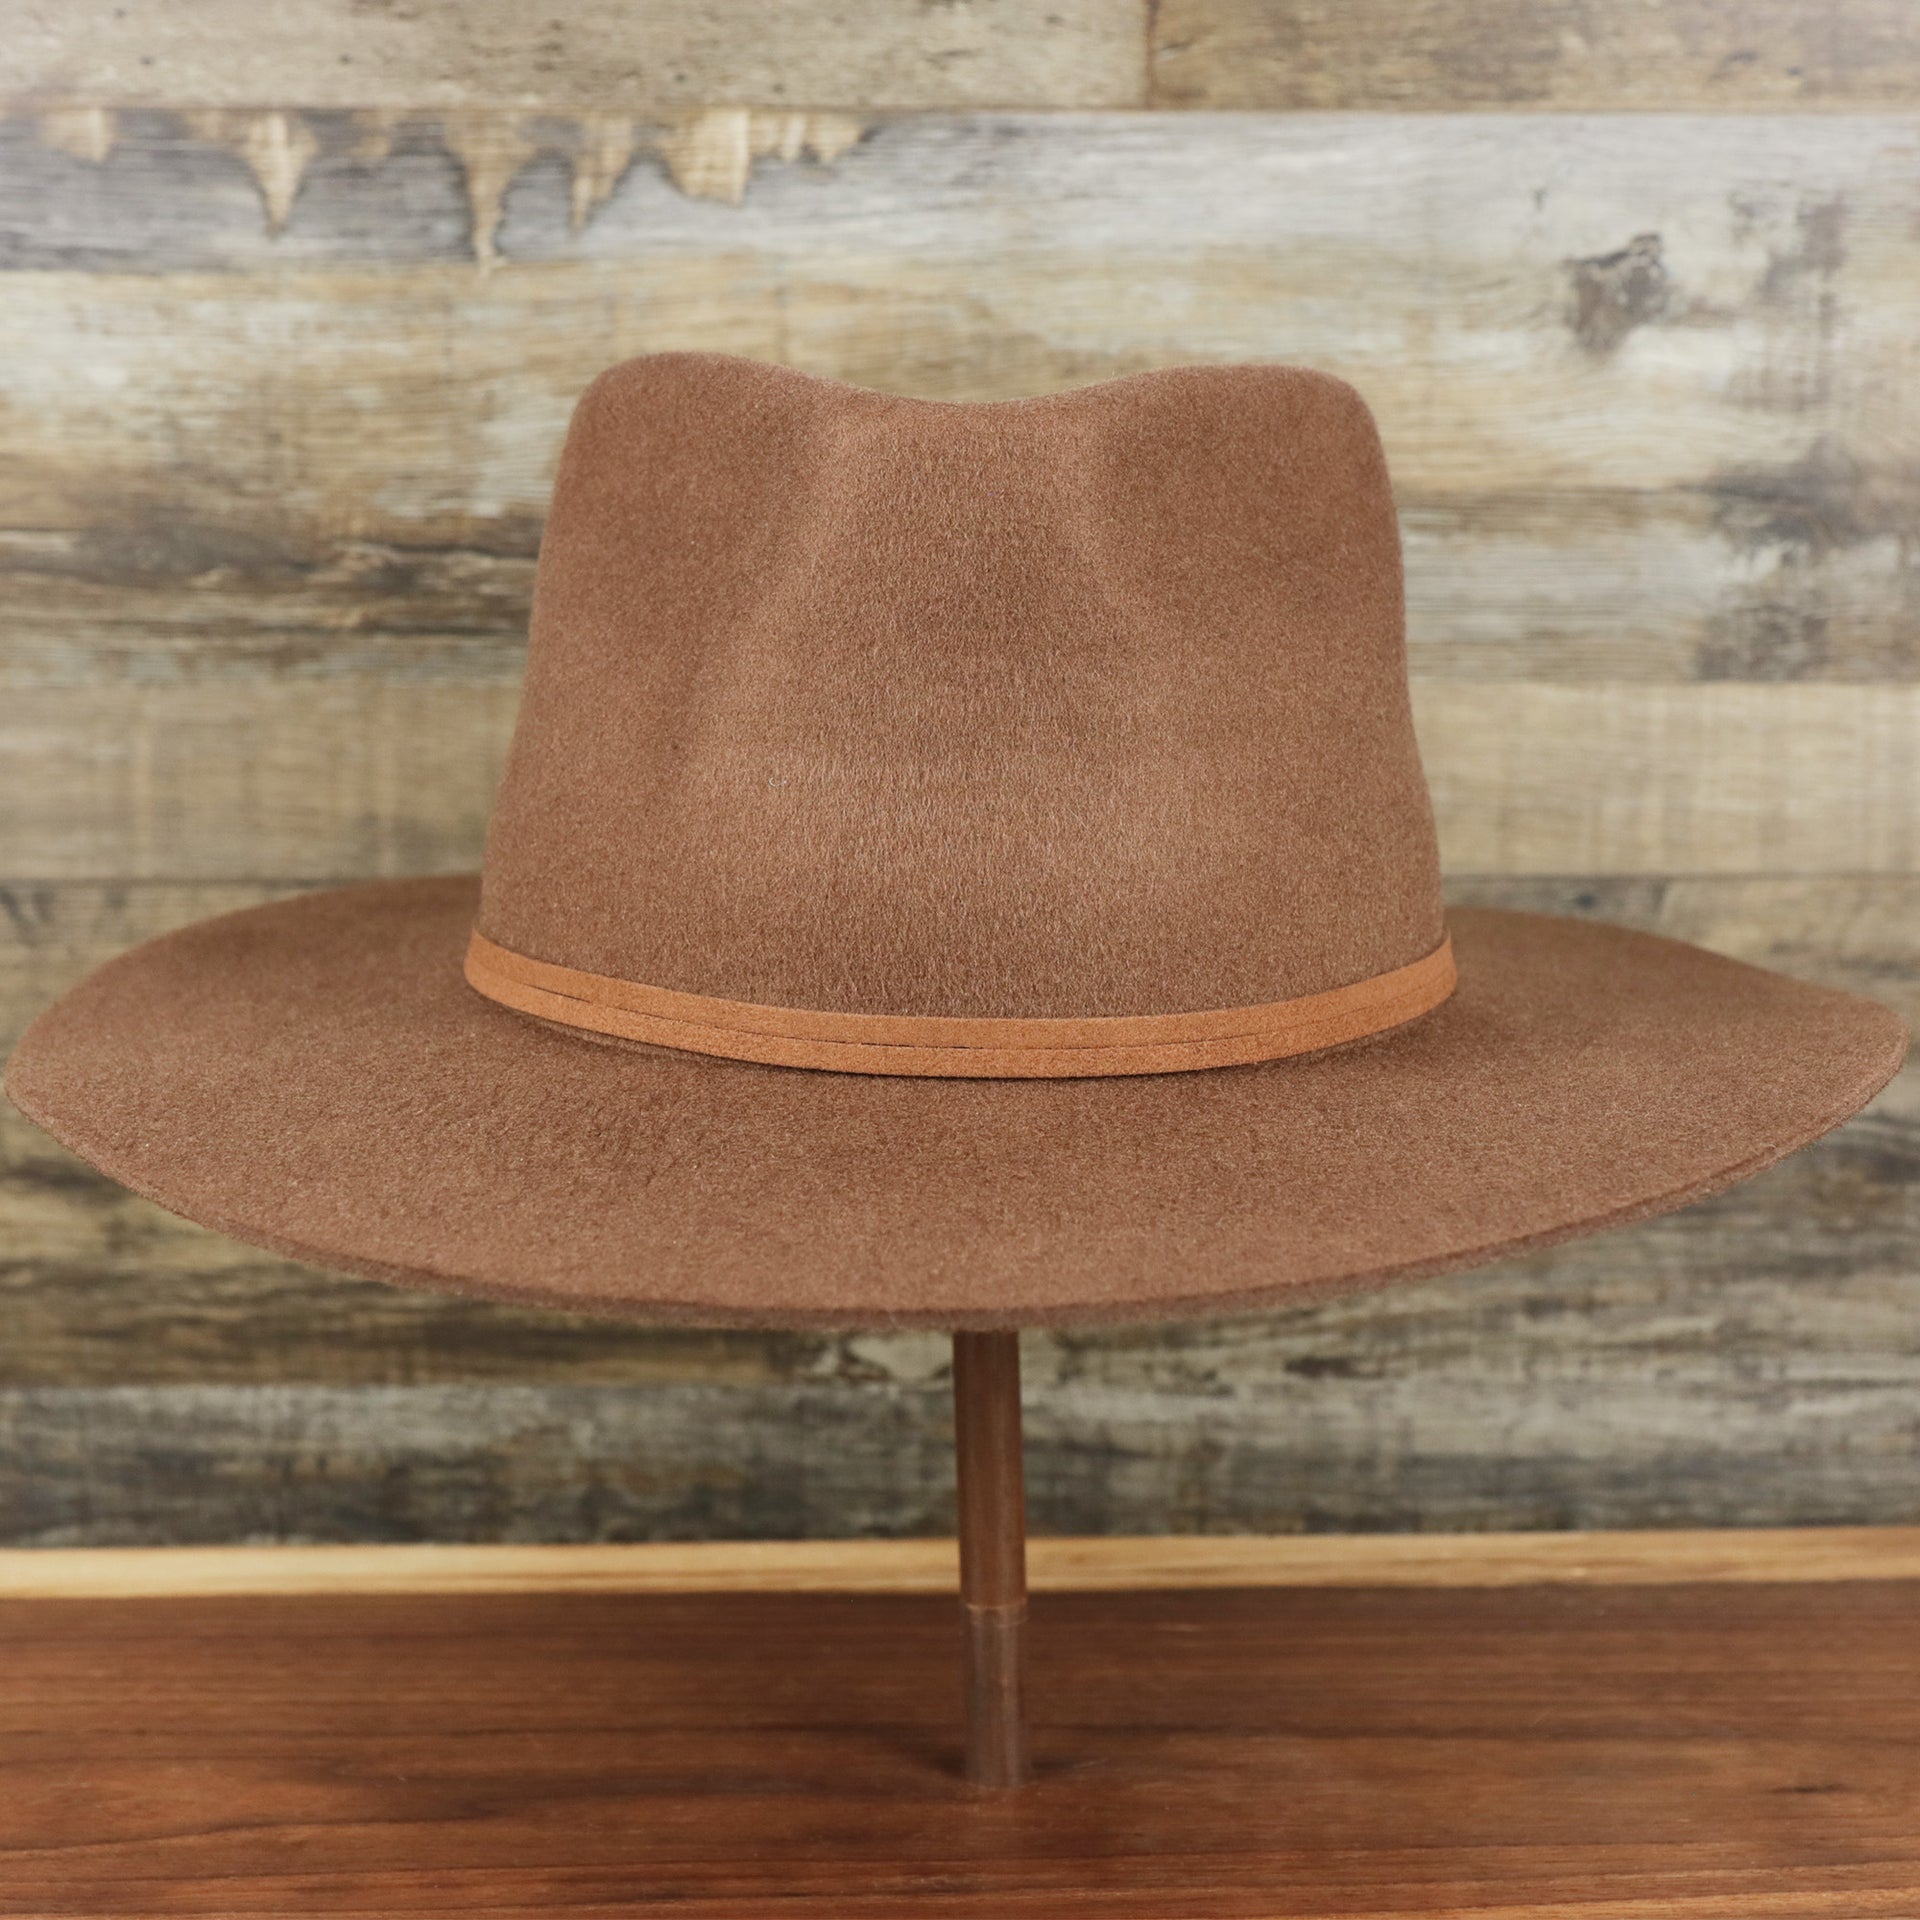 The front of the Wide Brim Ribbon Edge Brown Fedora Hat with Black Silk Interior | Zertrue 100% Australian Wool